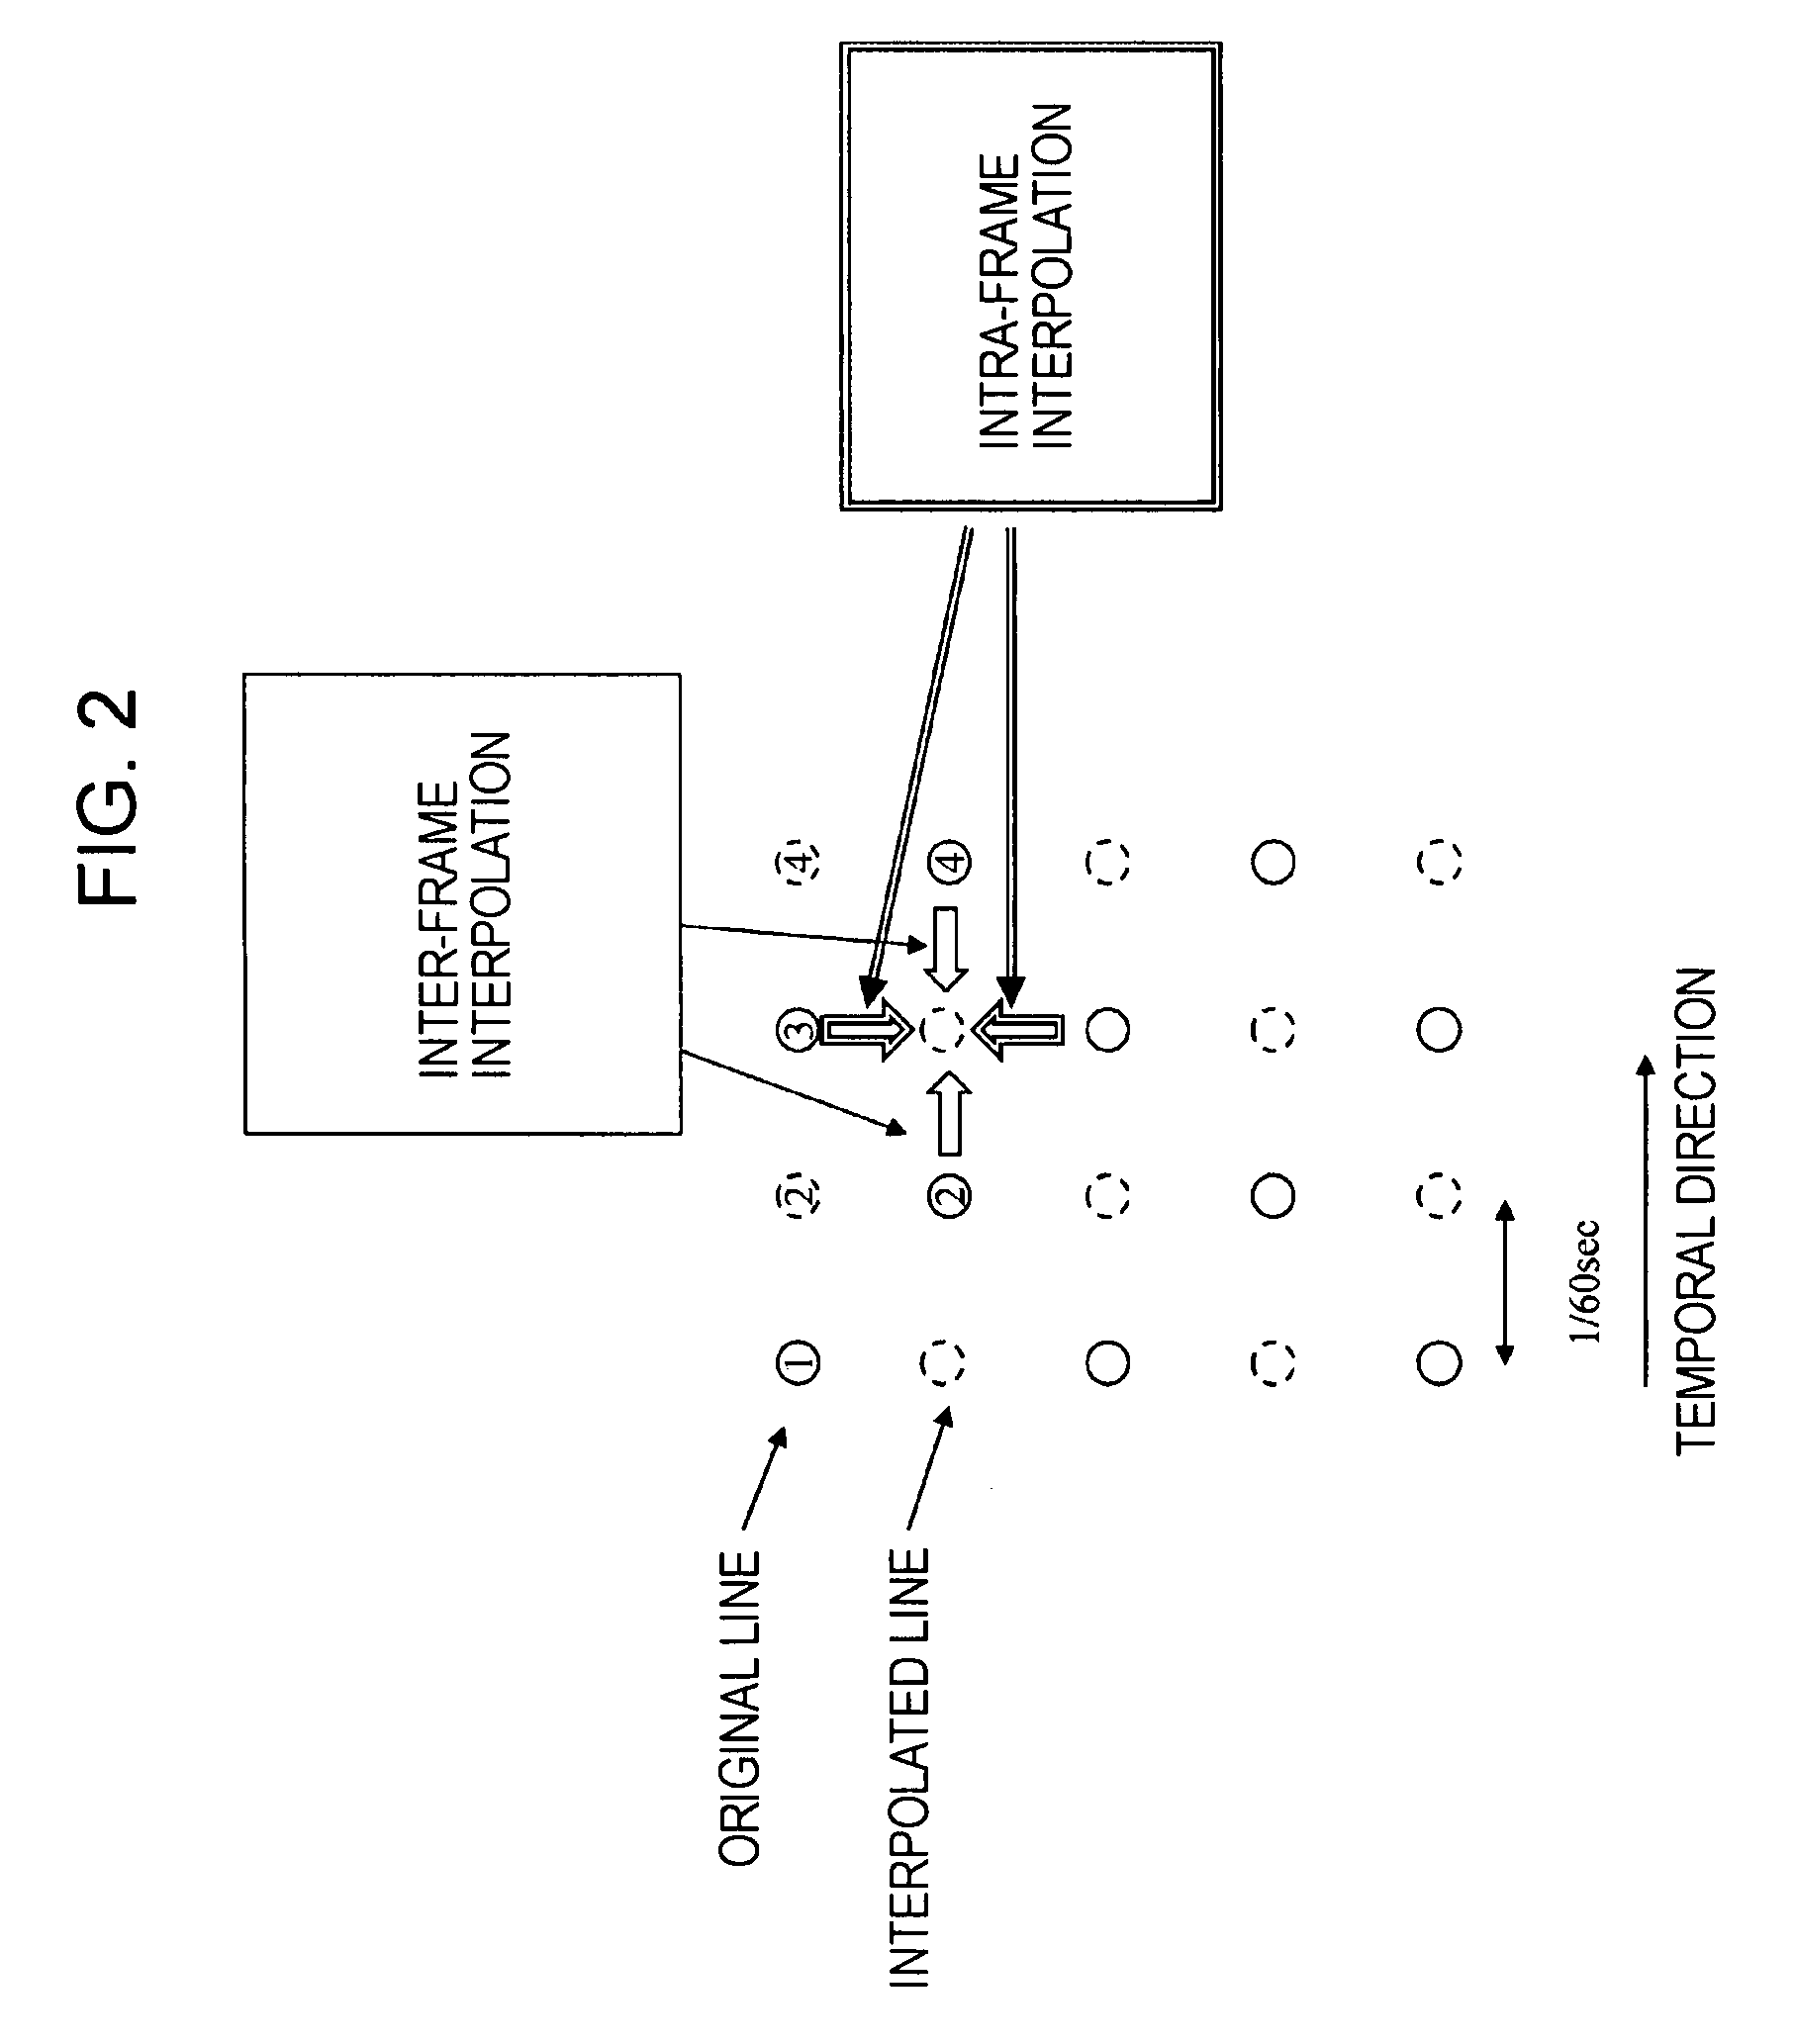 Image display apparatus, signal processing apparatus, image display method, and computer program product